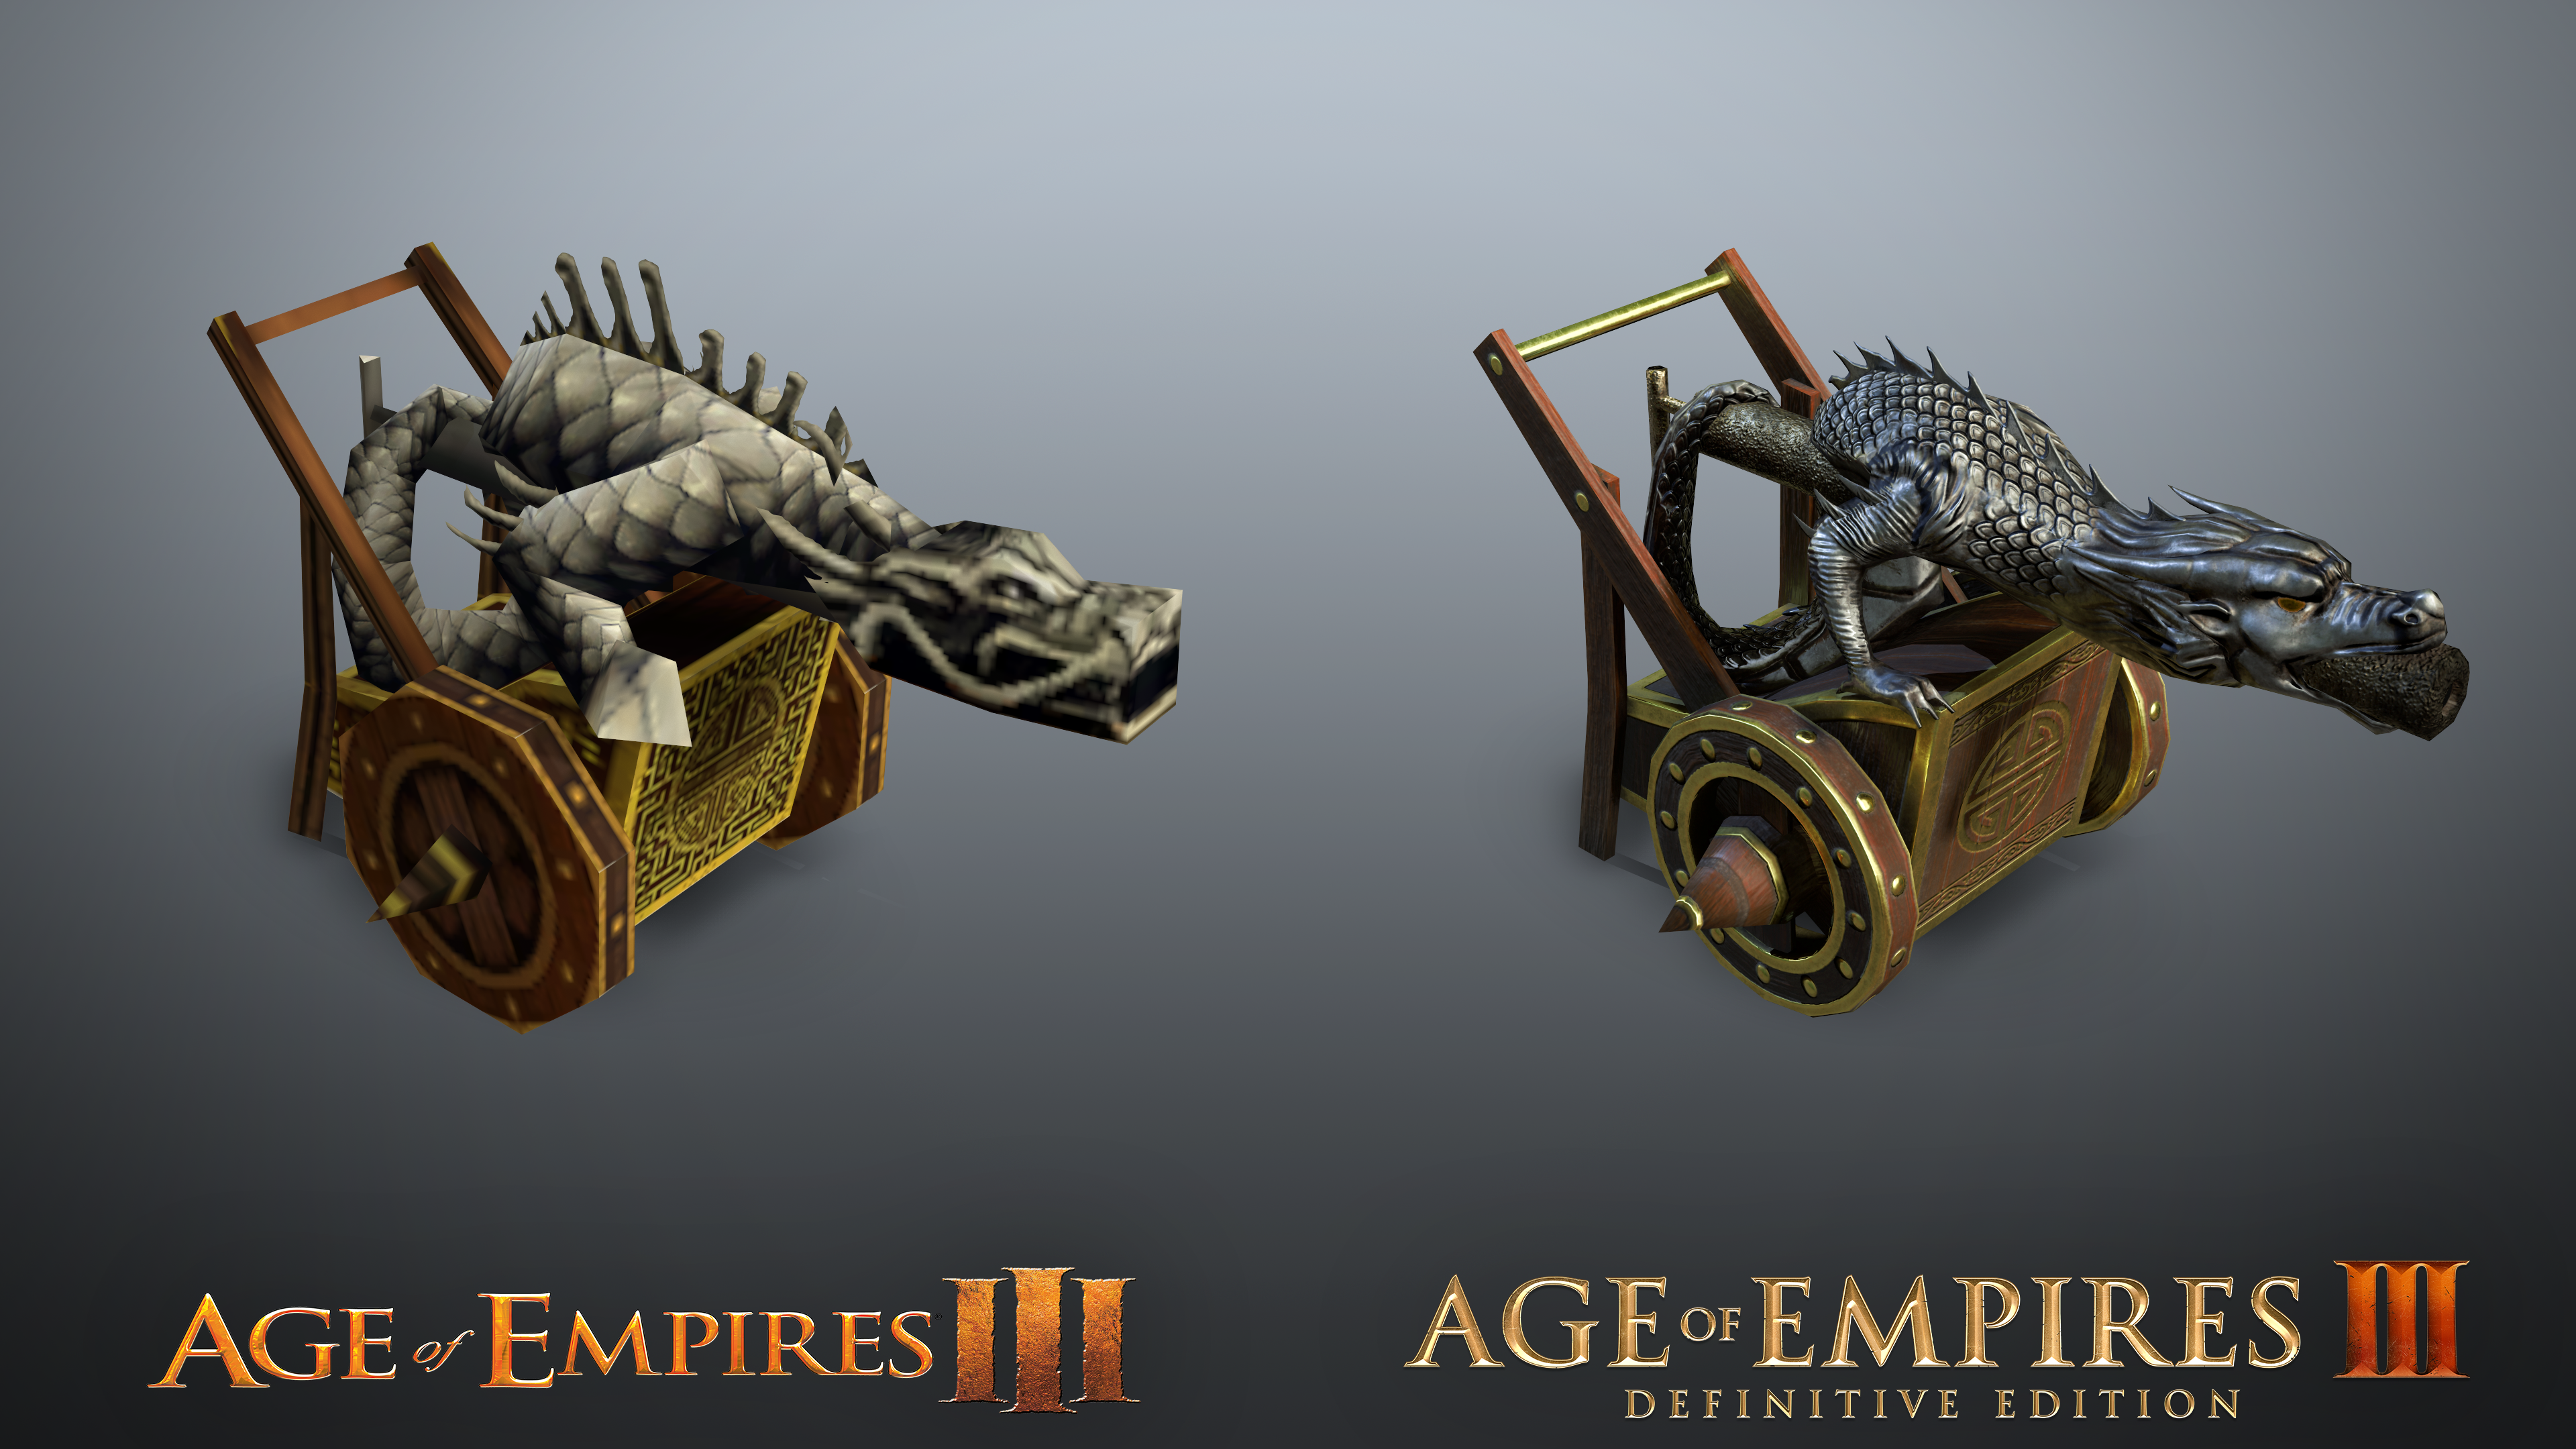 Age of Empires III: Definitive Edition comparison image